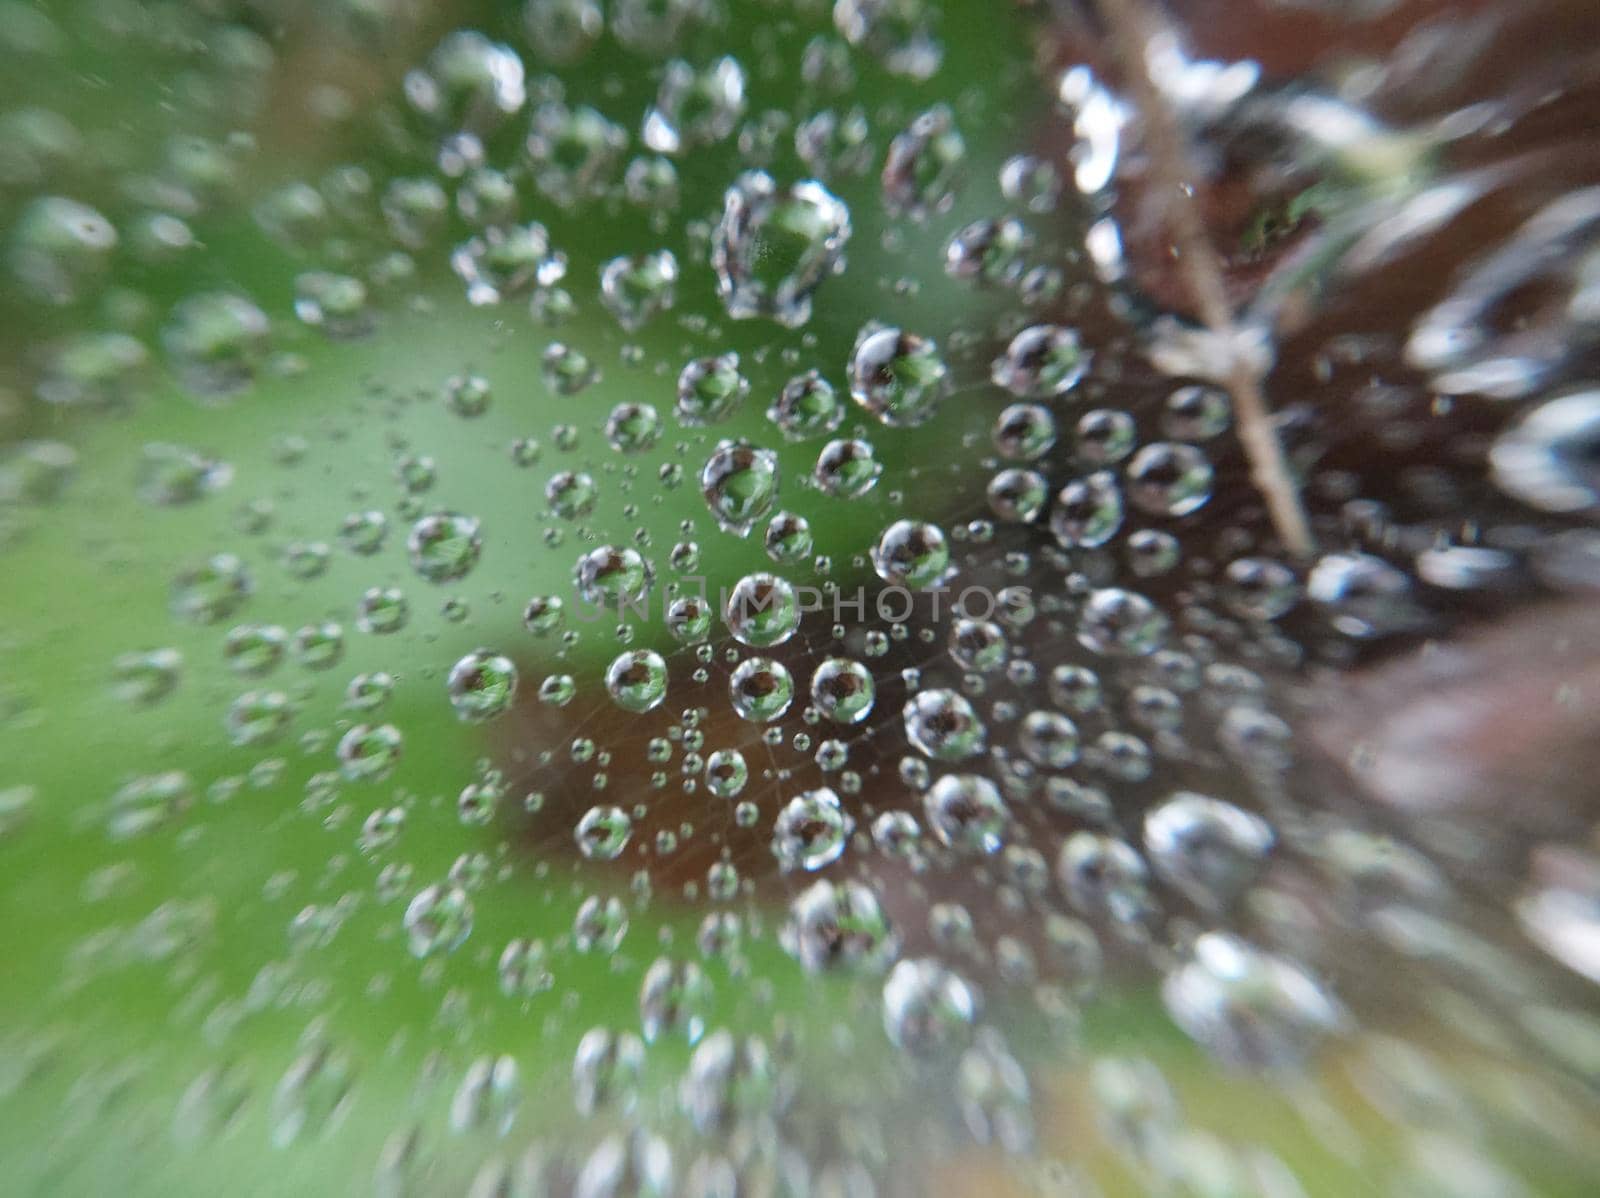 Dew drops lie on a the cobweb